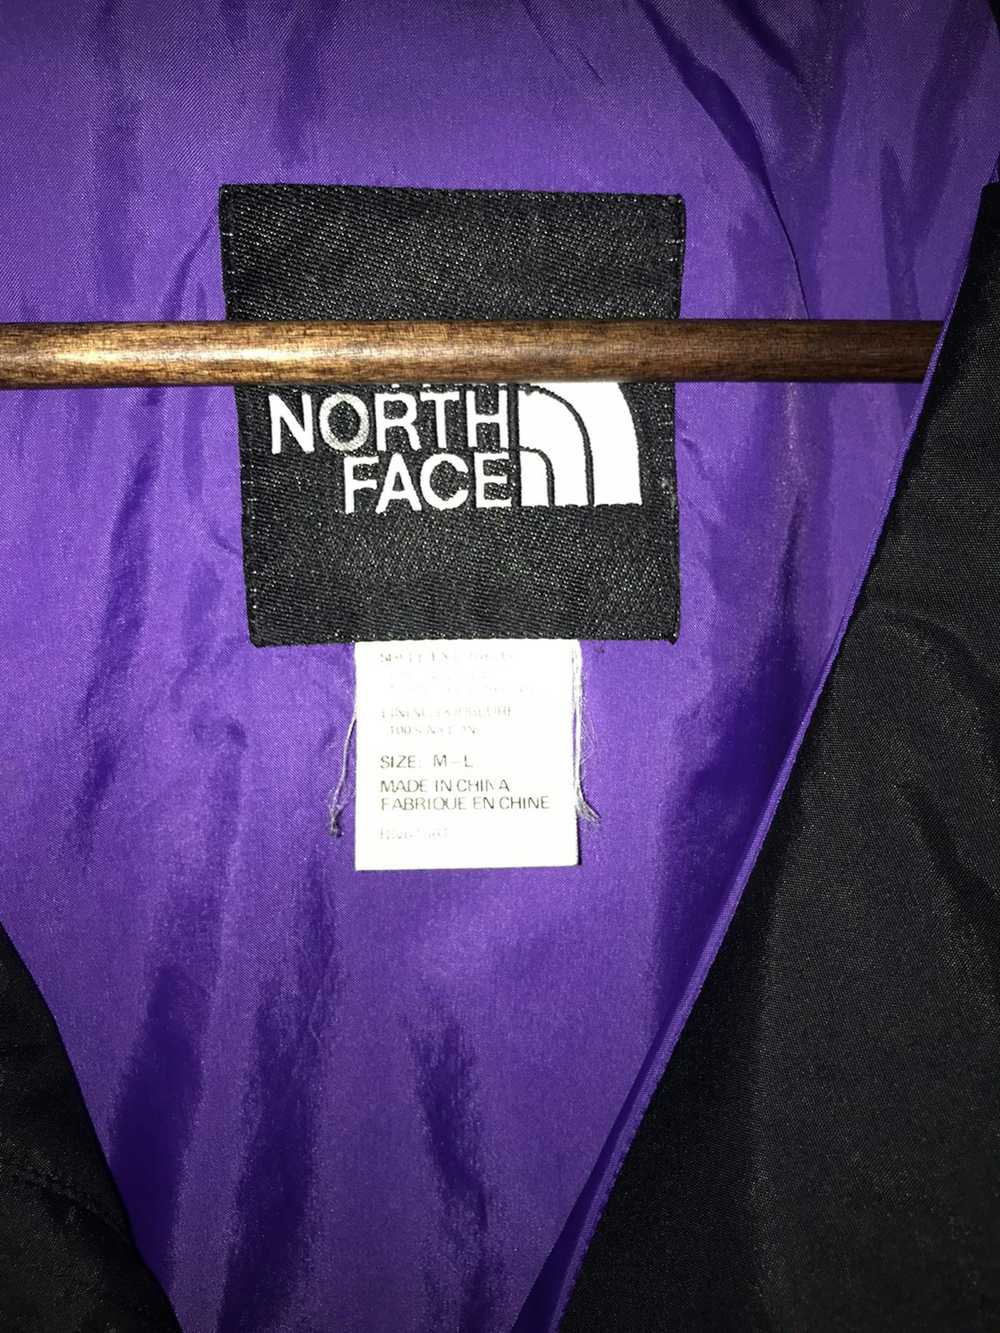 The North Face Men’s Vintage North Face jacket - image 3